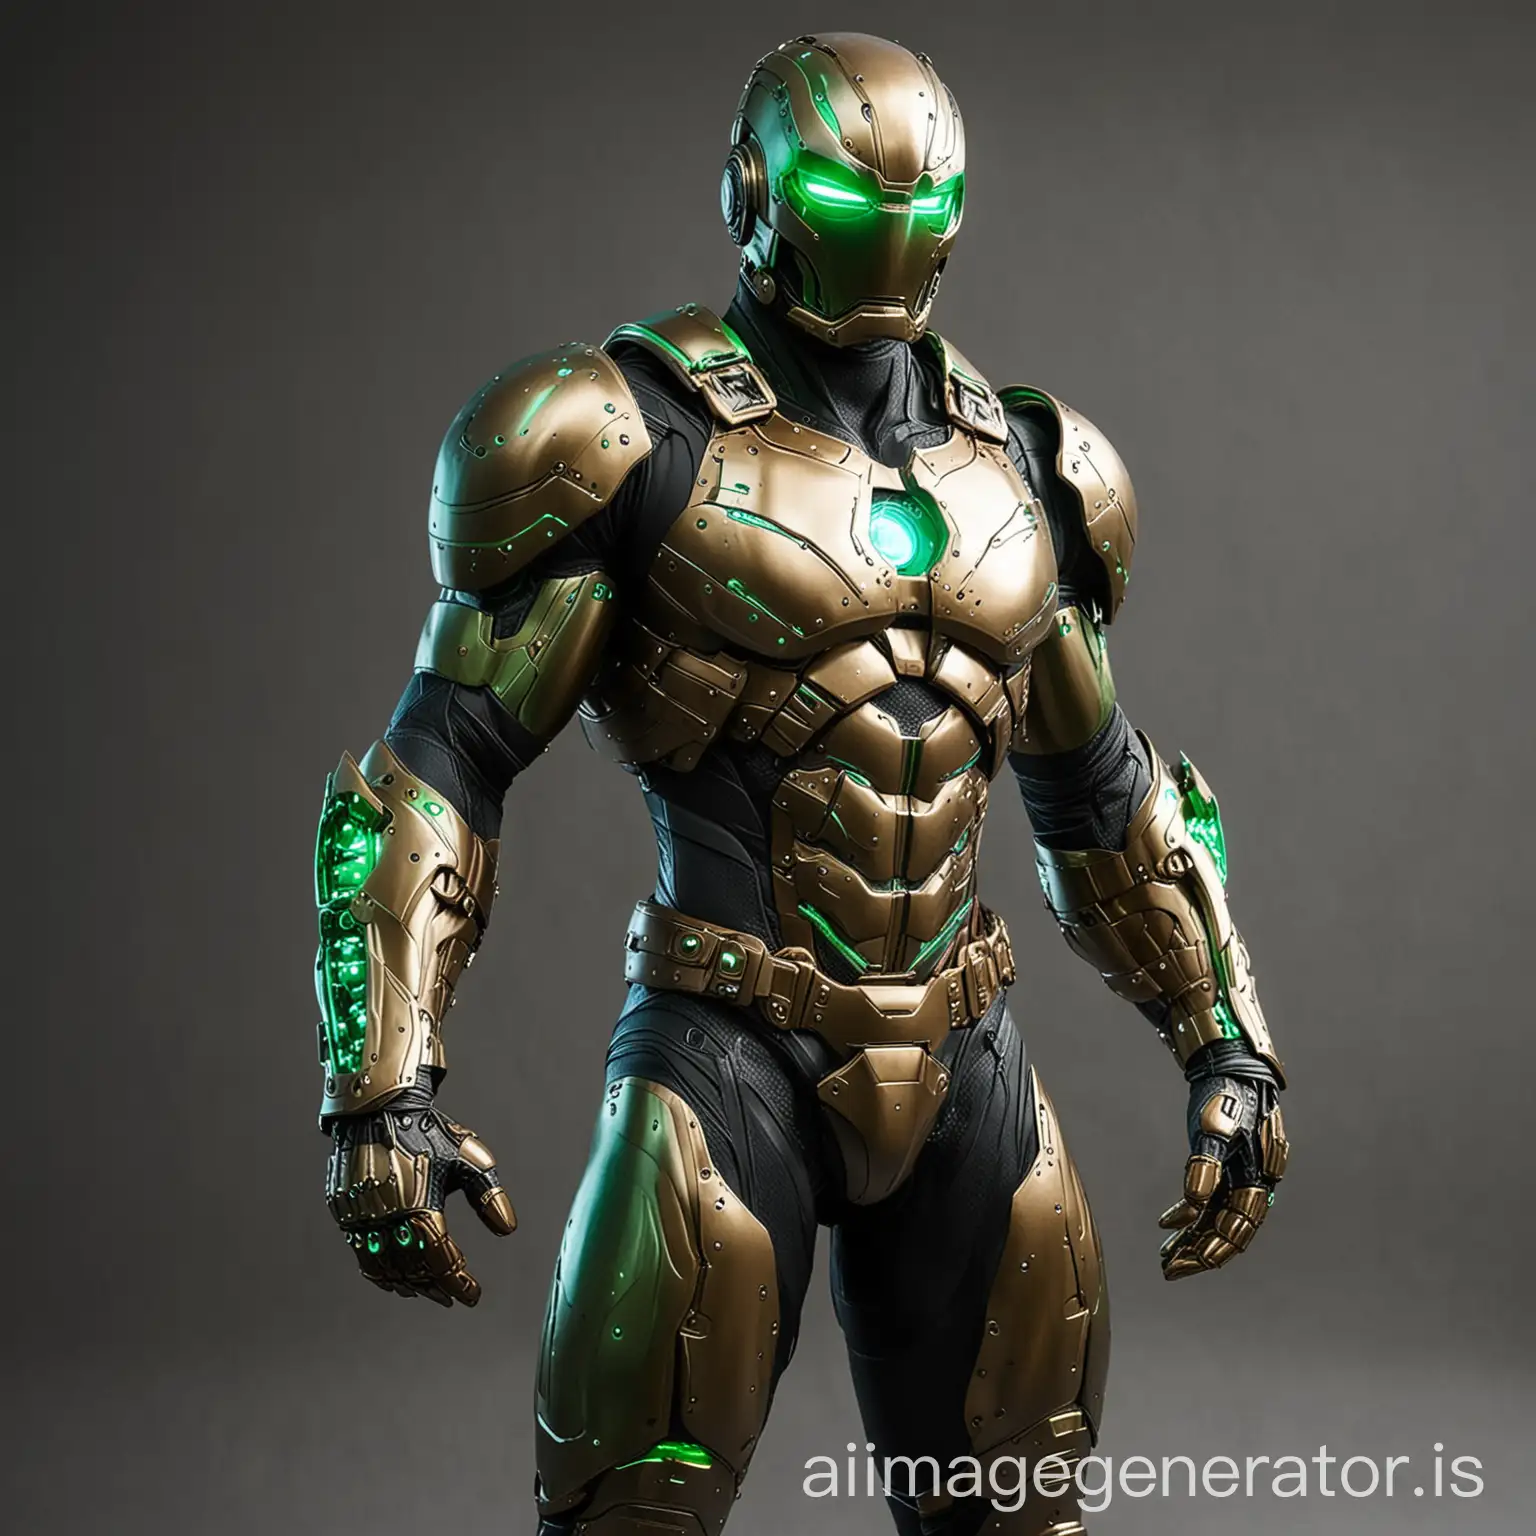 6ft-6-Muscular-Superhero-in-Bronze-Armor-Suit-with-HiTech-Accessories